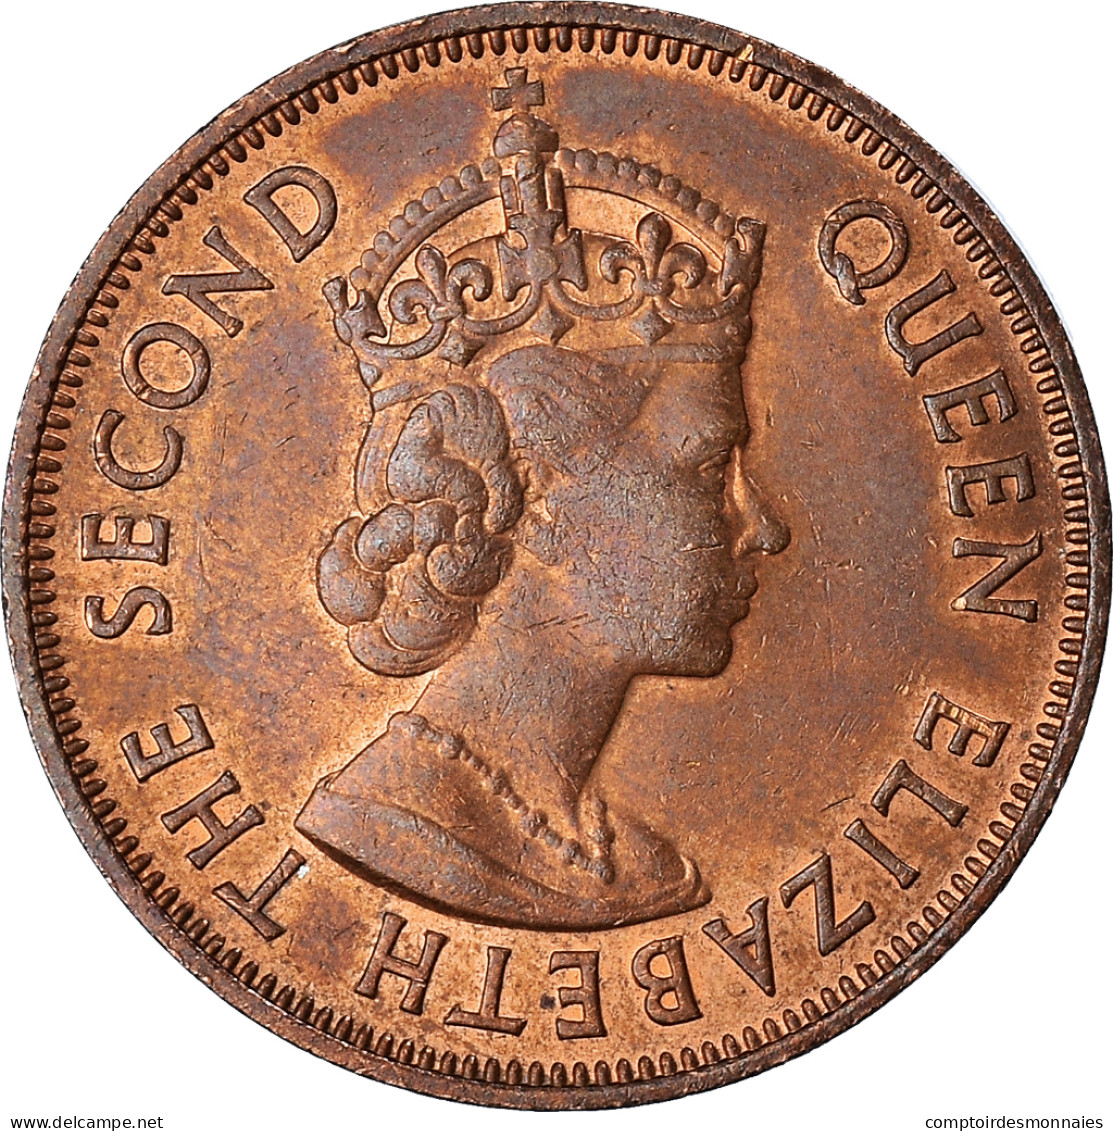 Monnaie, Maurice, Elizabeth II, 5 Cents, 1975, TTB+, Bronze, KM:34 - Maurice